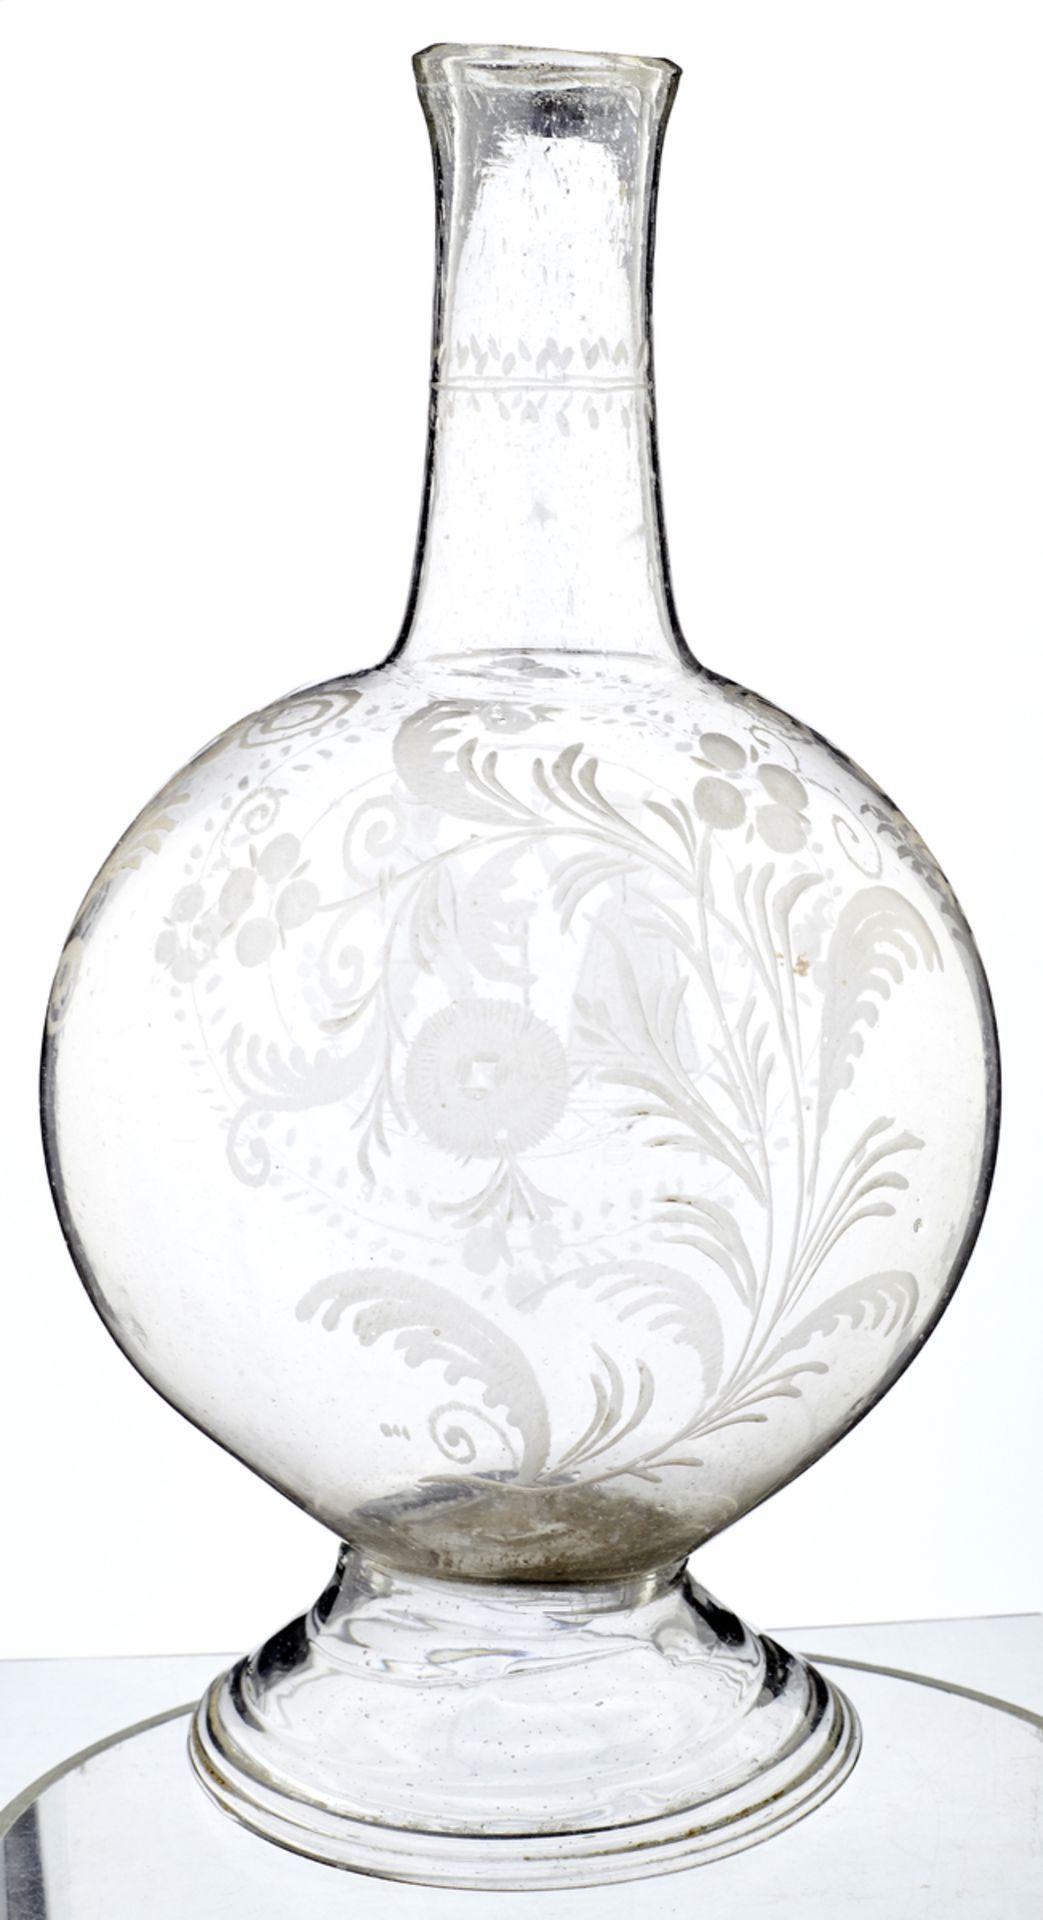 MassflascheWohl Flühli, um 1800. Farbloses, dünnwandig geblasenes Glas. Abgeplattete Kugelform. - Bild 2 aus 2